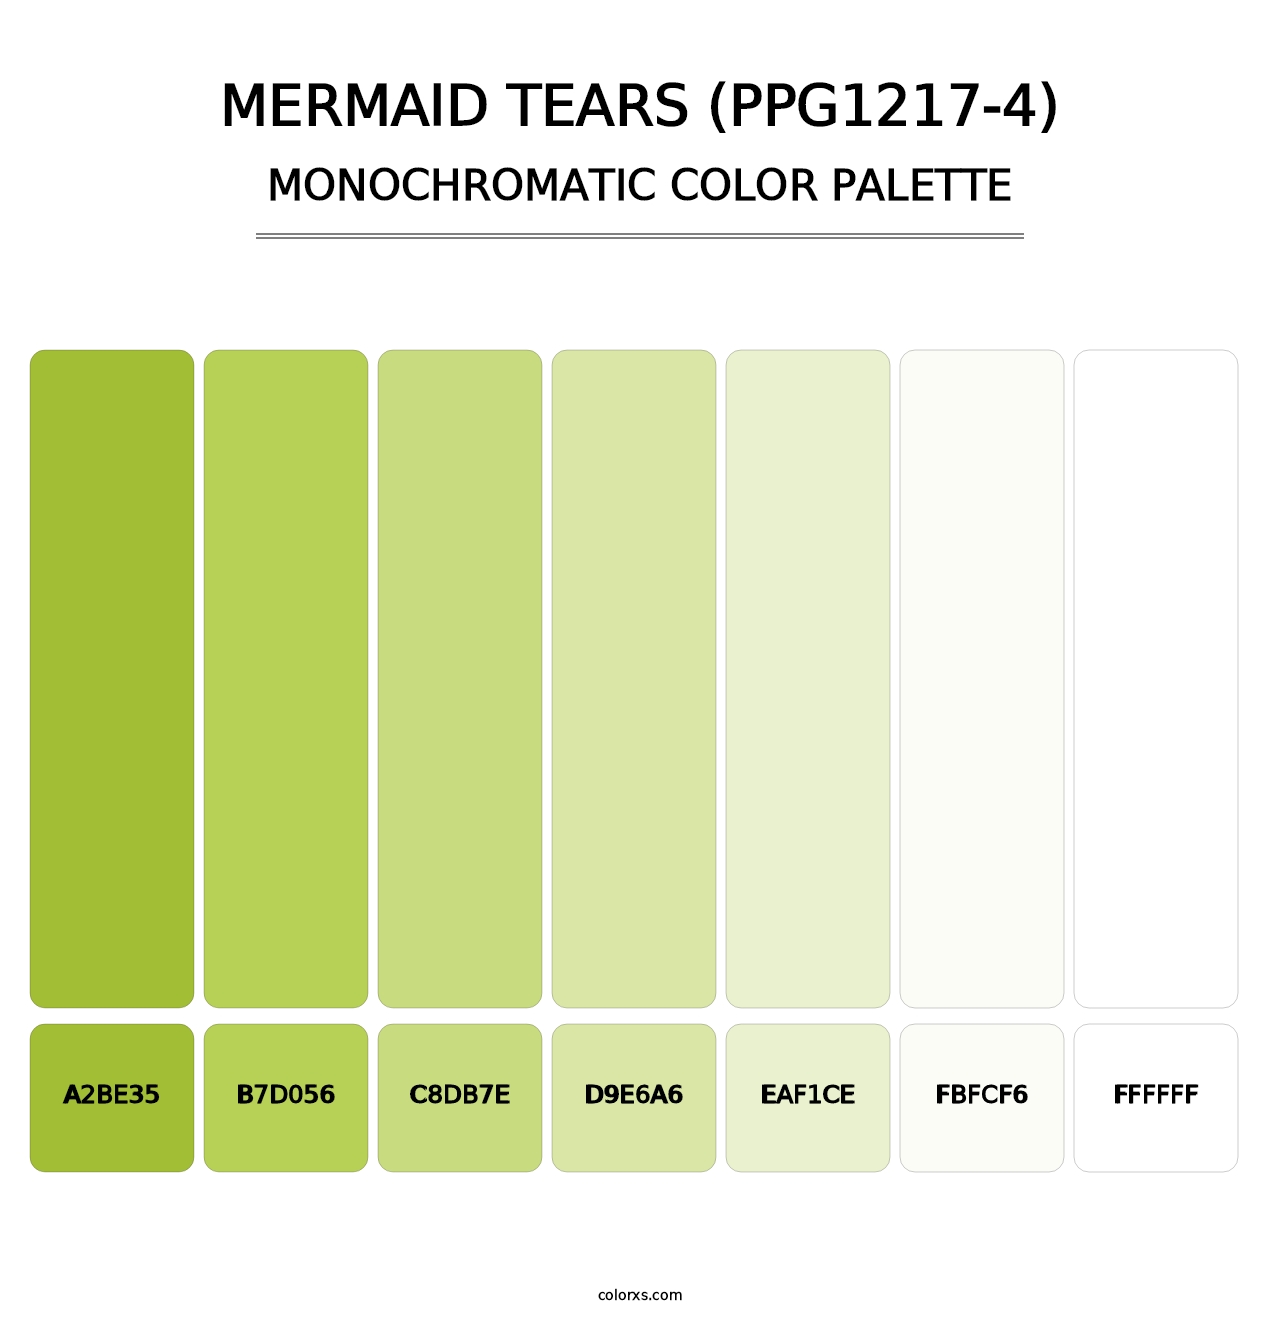 Mermaid Tears (PPG1217-4) - Monochromatic Color Palette